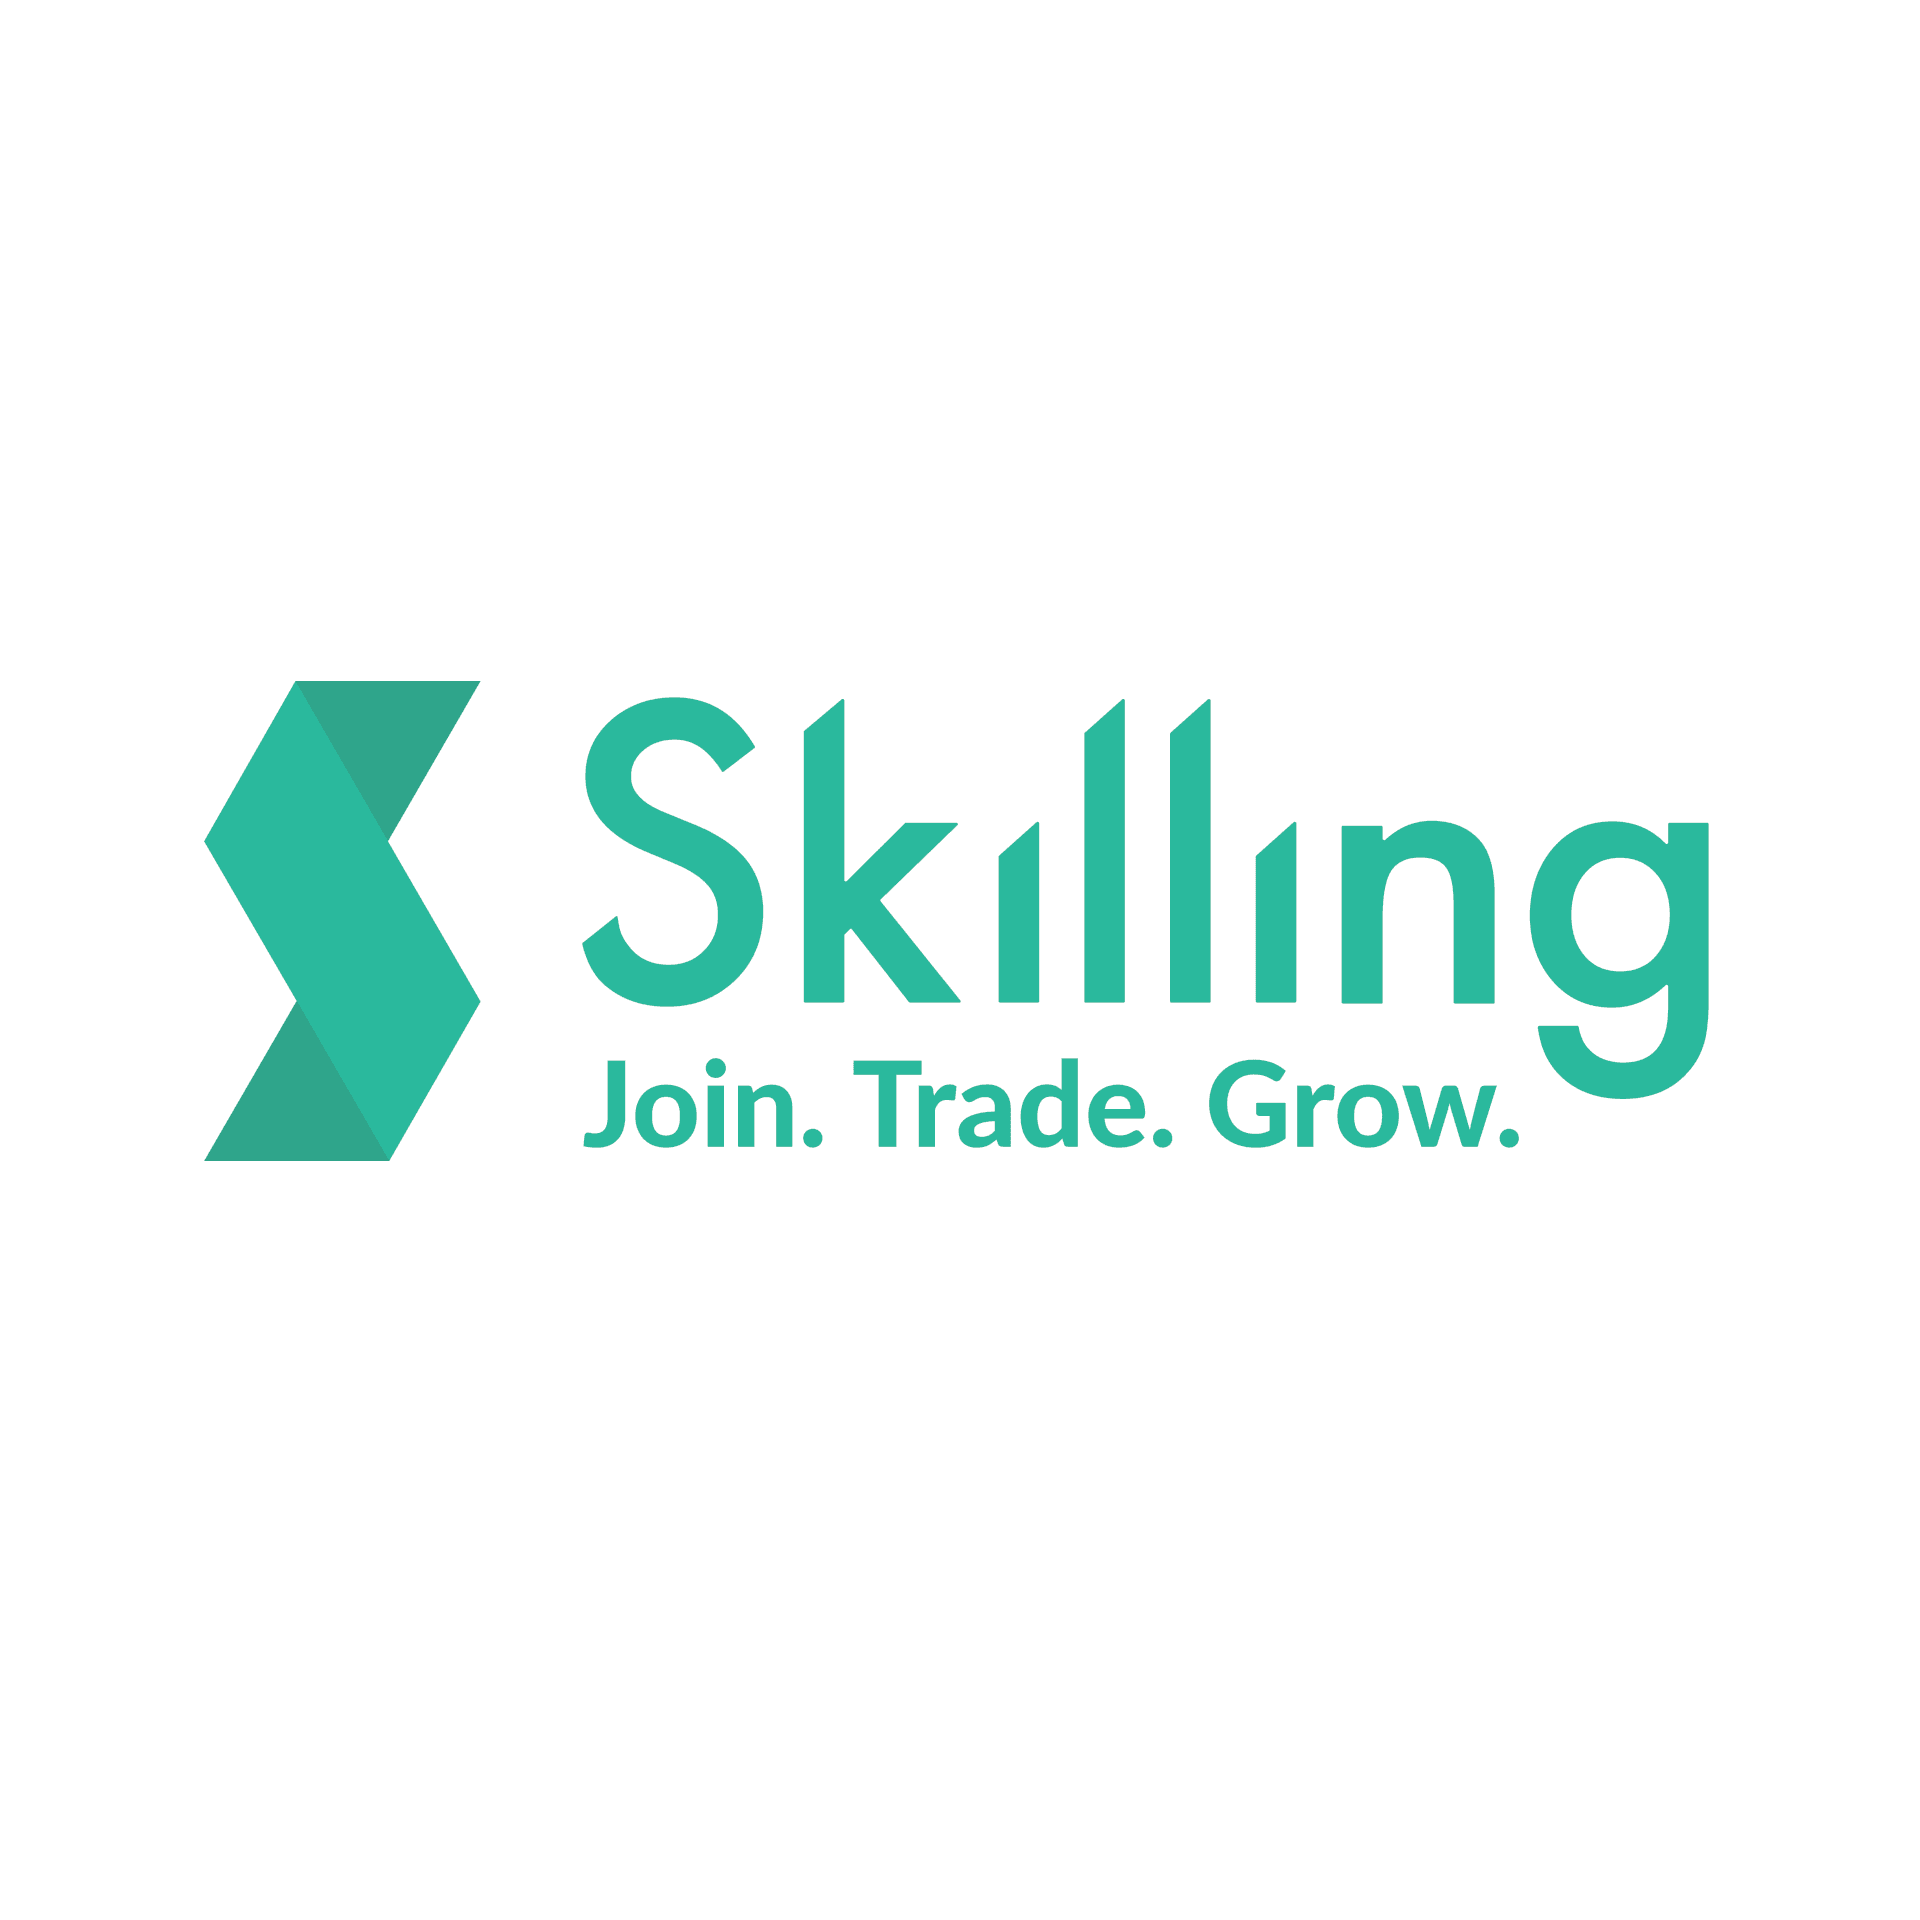 Skilling logo